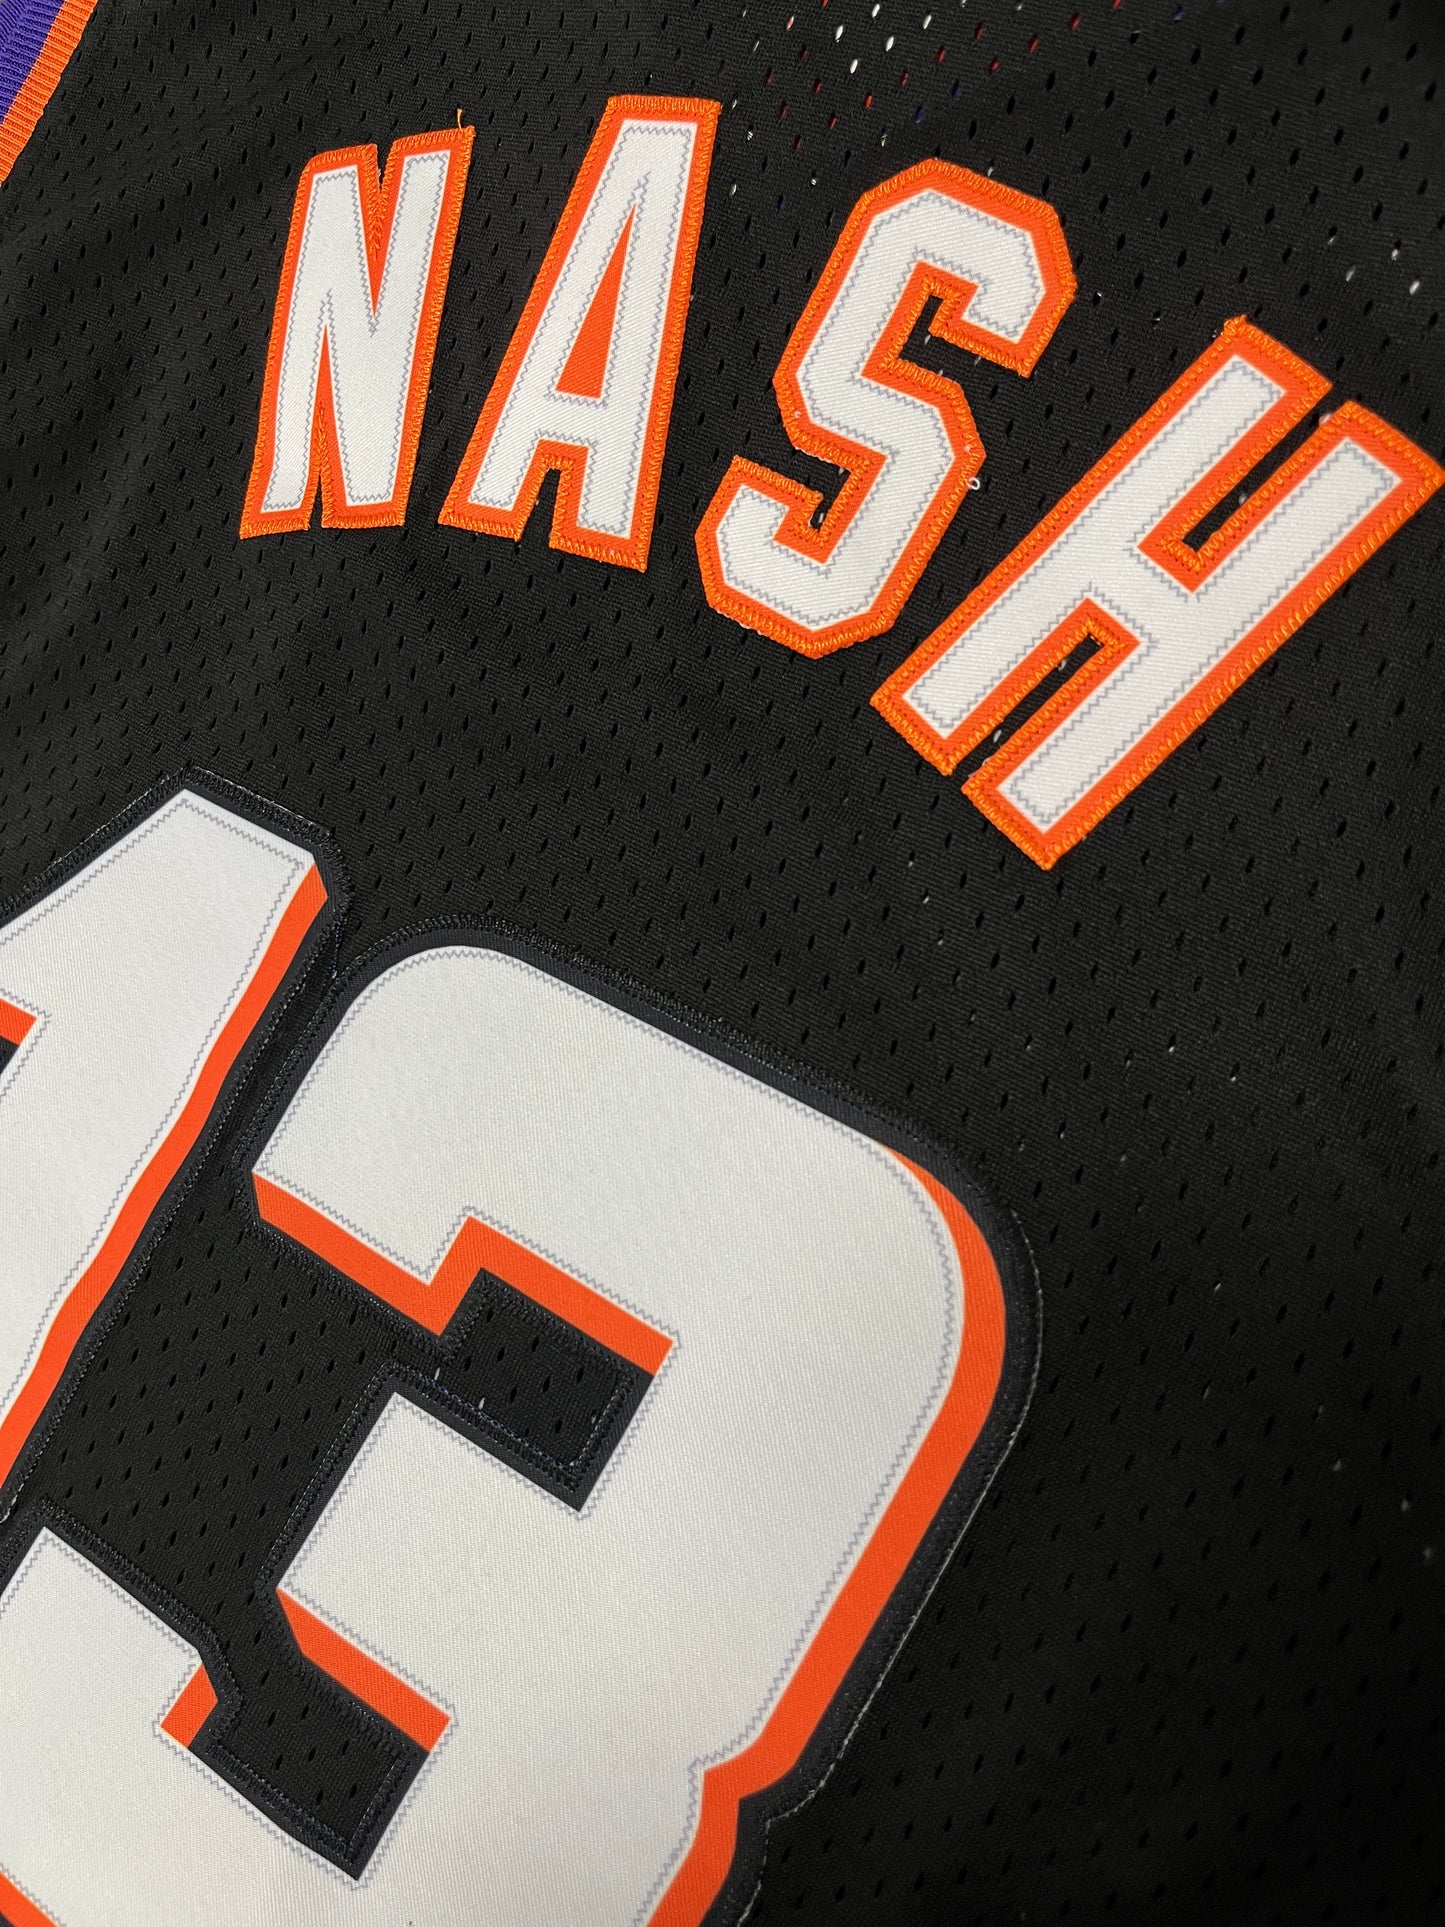 NASH 13 Black Phoenix Suns NBA Jersey